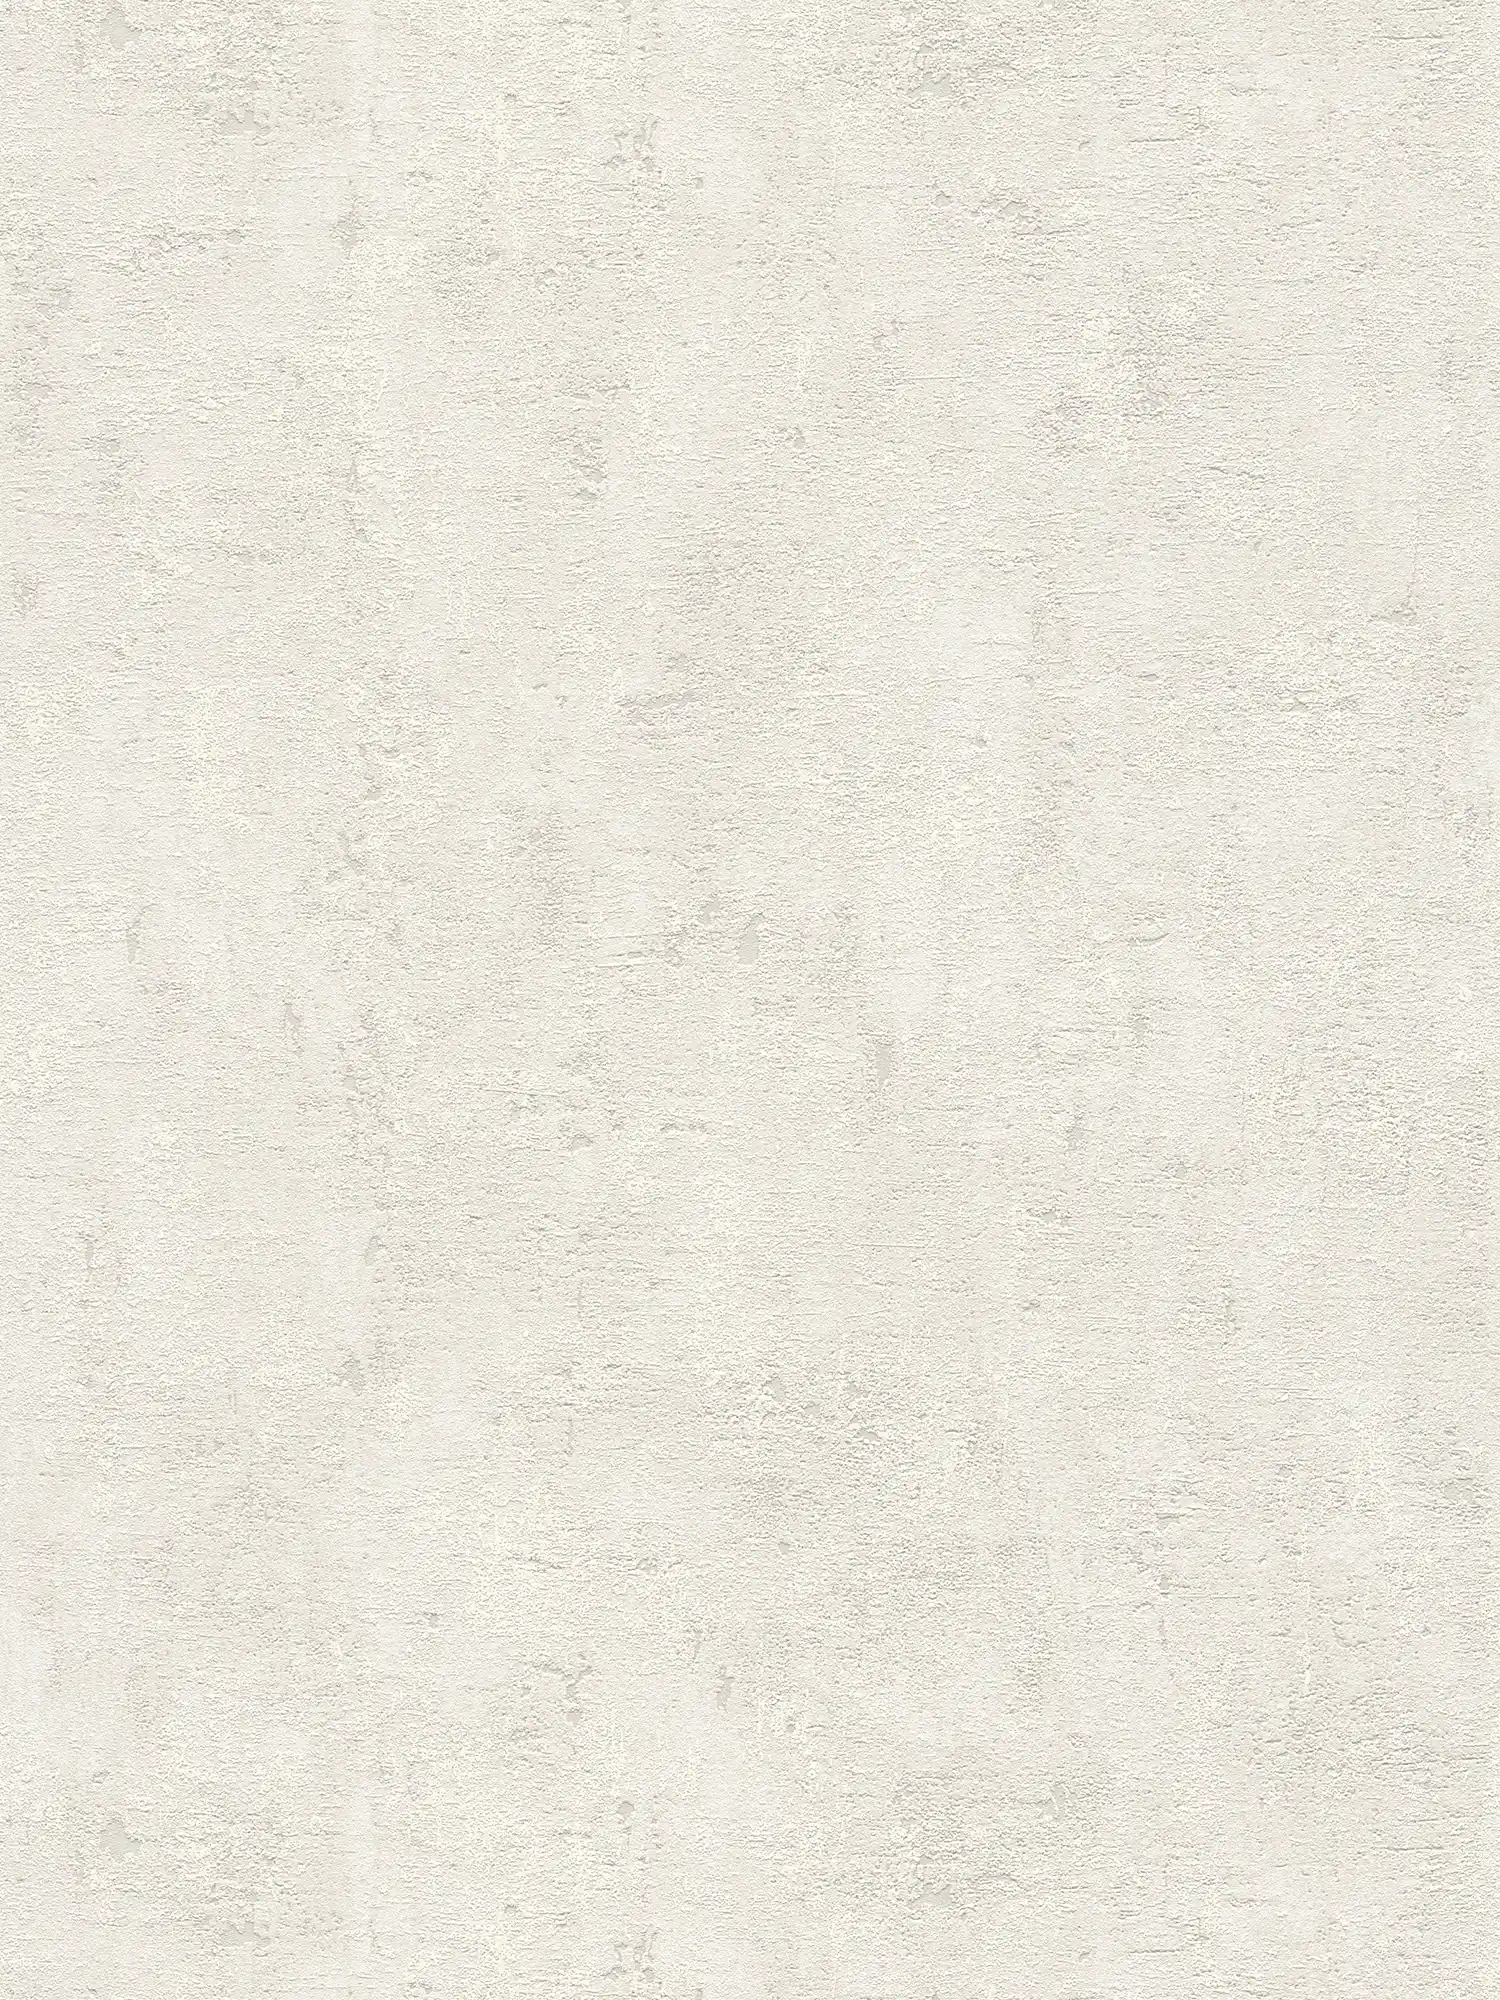 Used look wallpaper with plaster look in vintage style - grey
